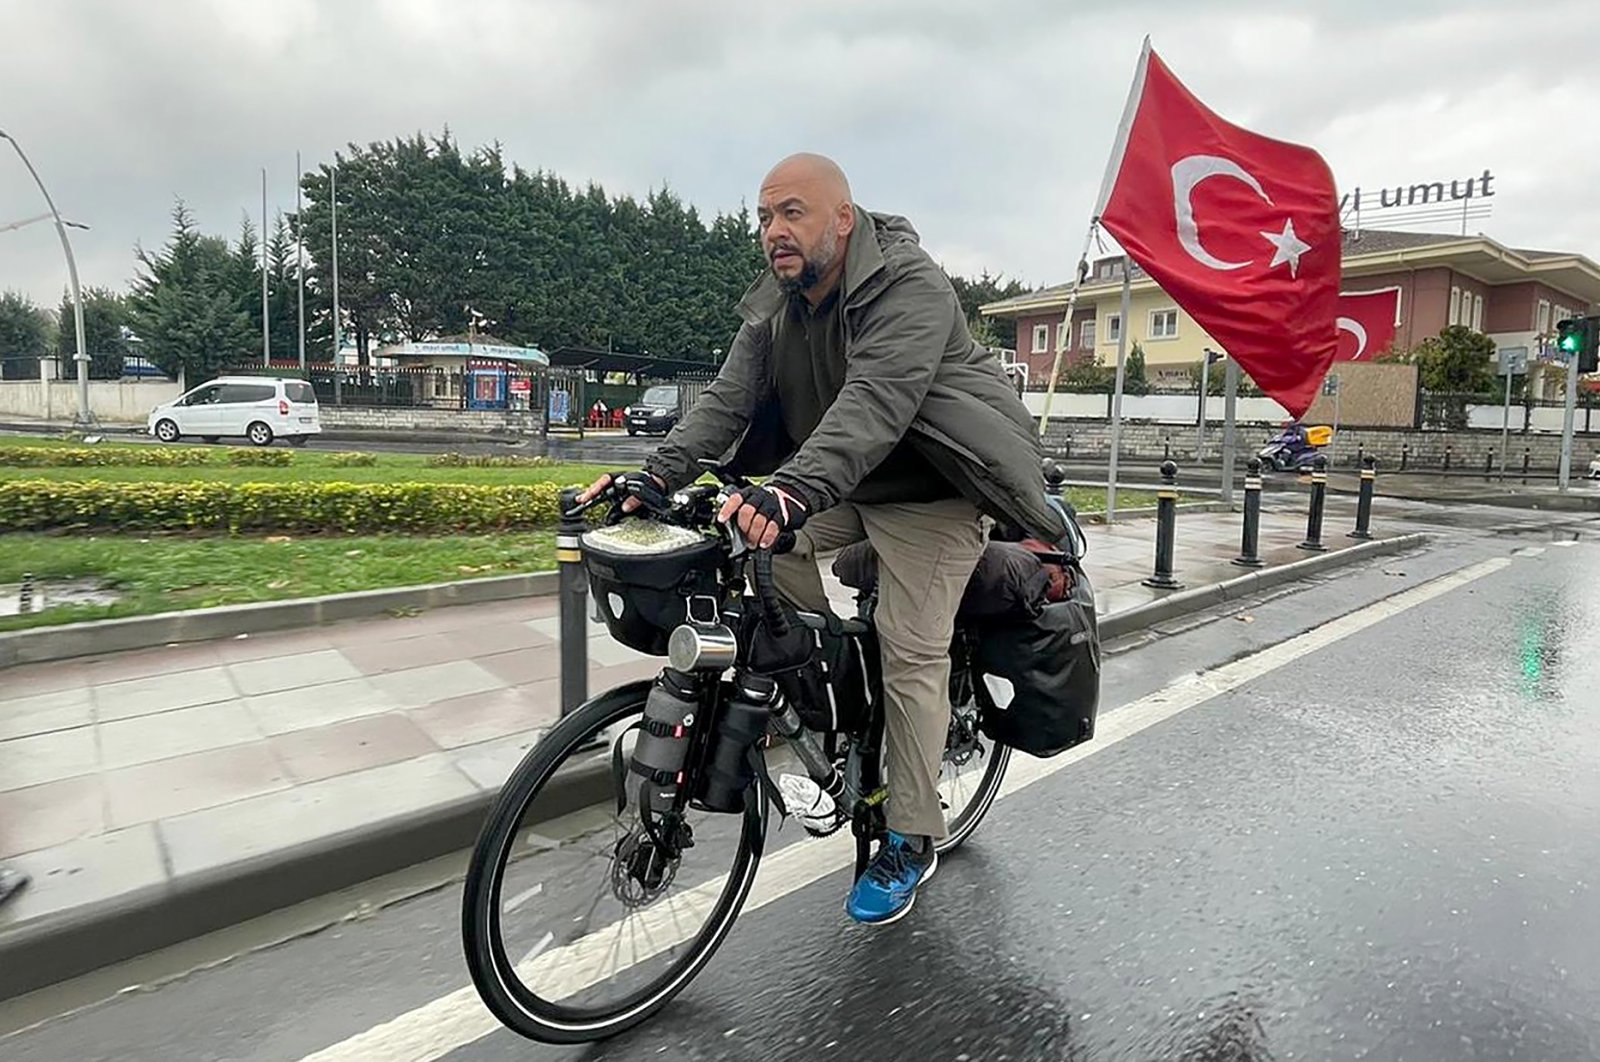 Pria Turki keliling dunia dengan sepeda untuk melawan rasisme, Islamofobia